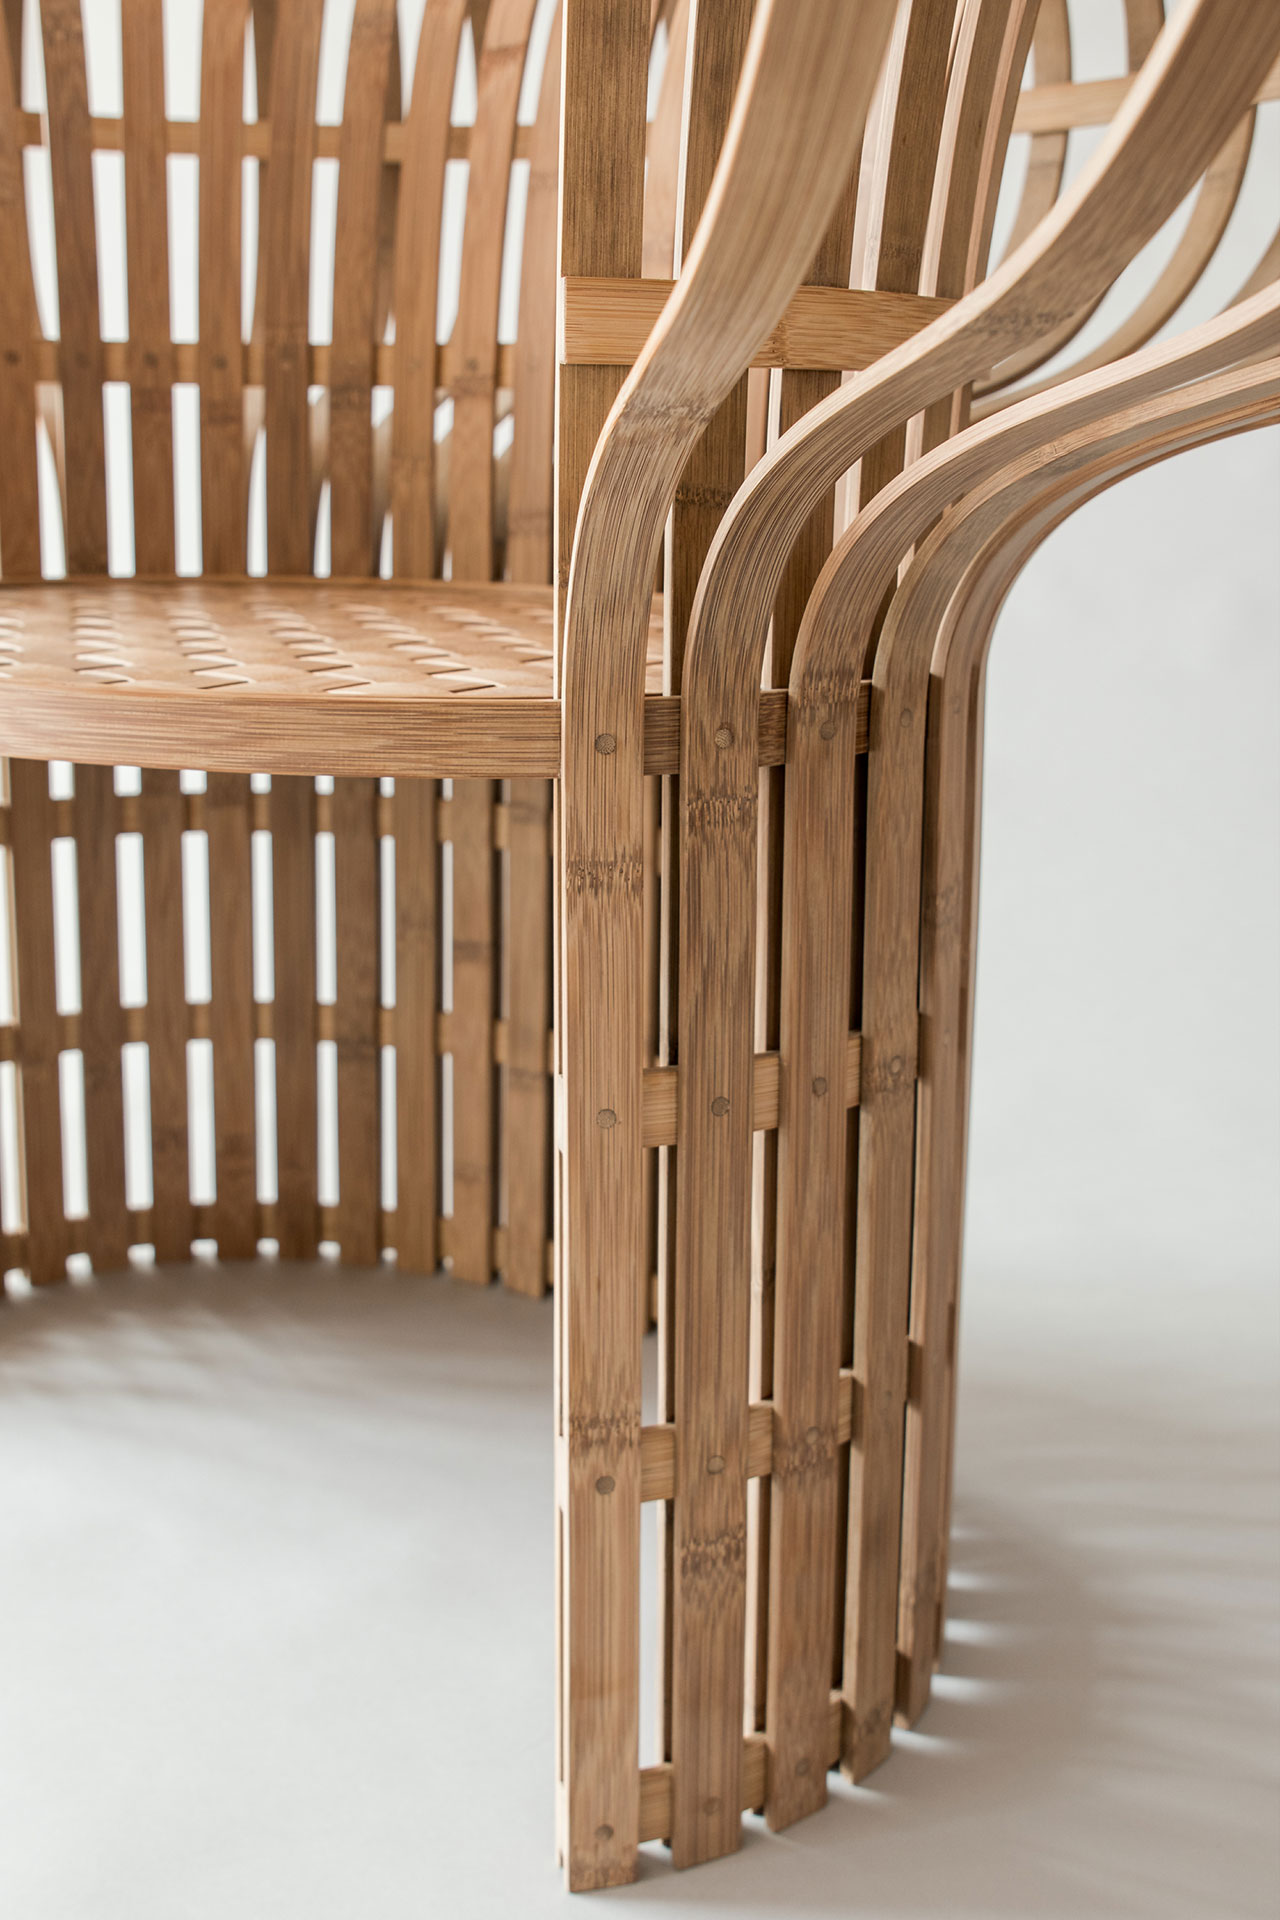 The Indigo-Dyed Bamboo Chair, designed by Jin Kuramoto (Japan). Craftsmen : Lin, Jian Cheng (Taiwan), Tang, Wen-Chun (Taiwan). Photo by Maciej Korbas (Poland) / Courtesy NTCRI &amp; Taiwan Designers Web.